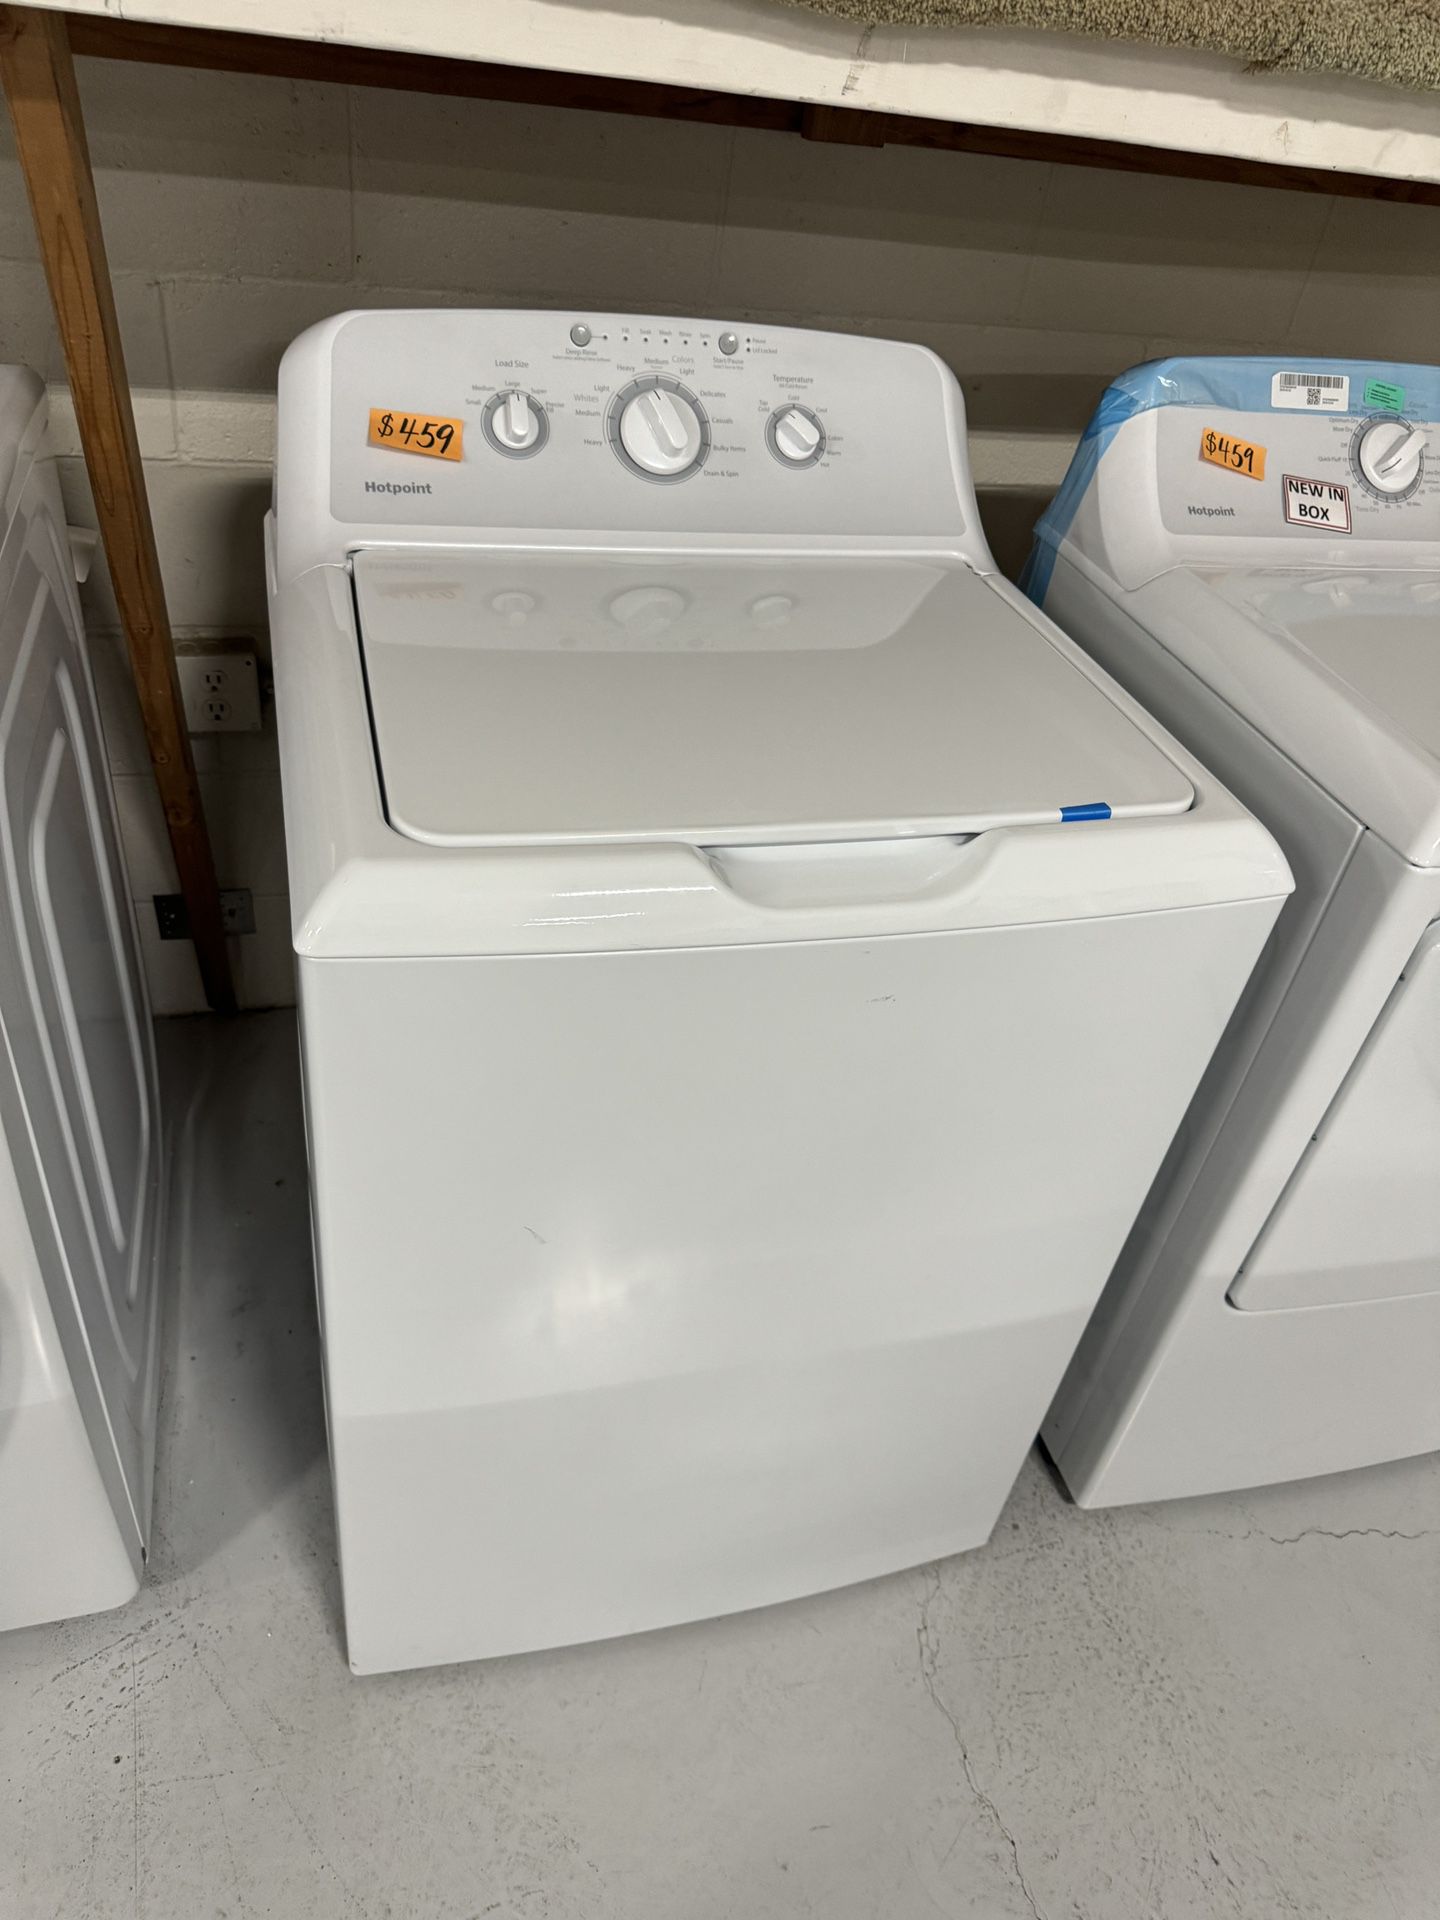 Brand New Washer GE In Box Full Warranty 